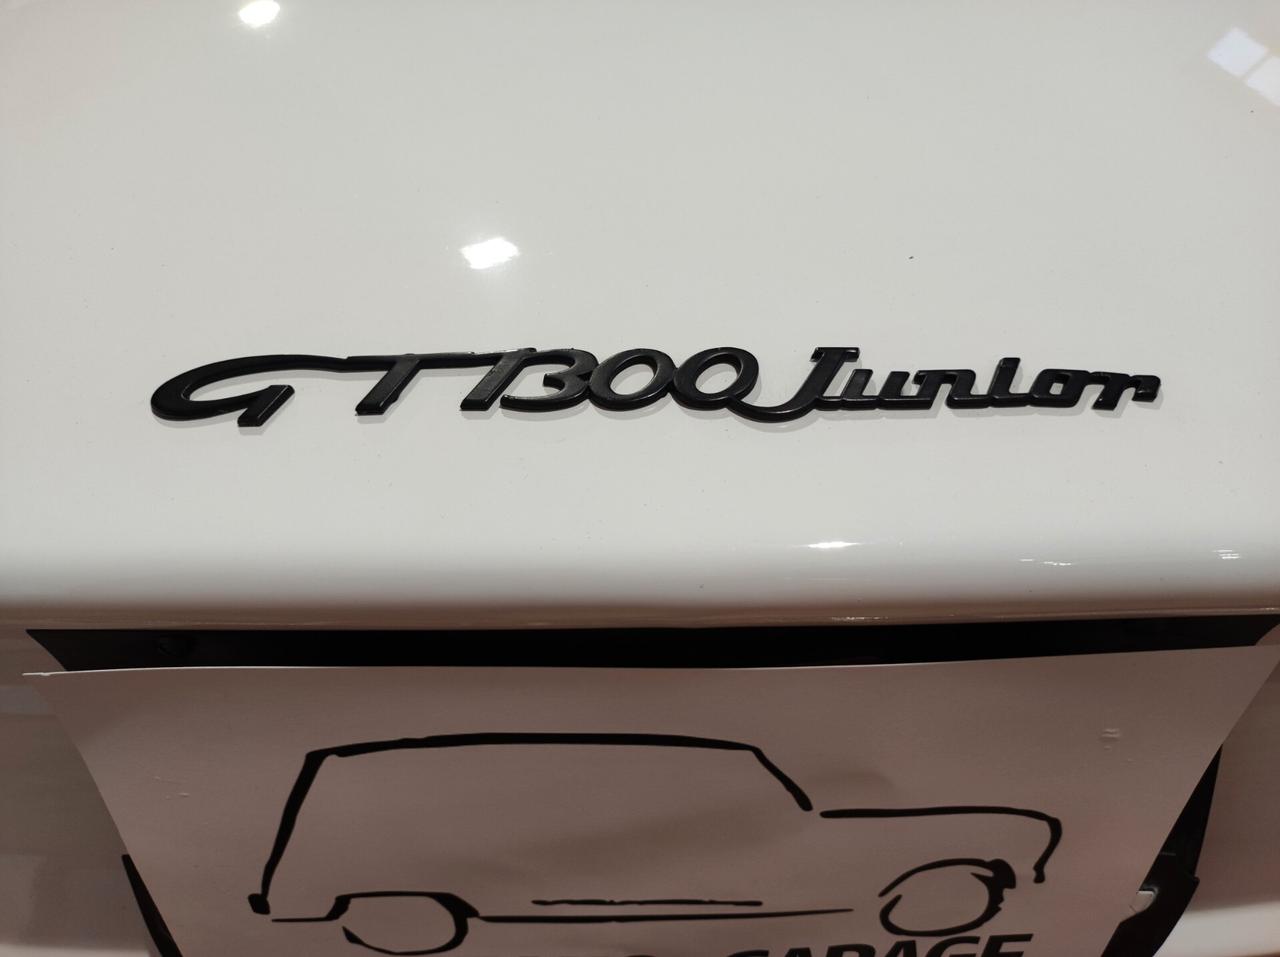 Alfa Romeo GT Gt1300Junior - Scalino